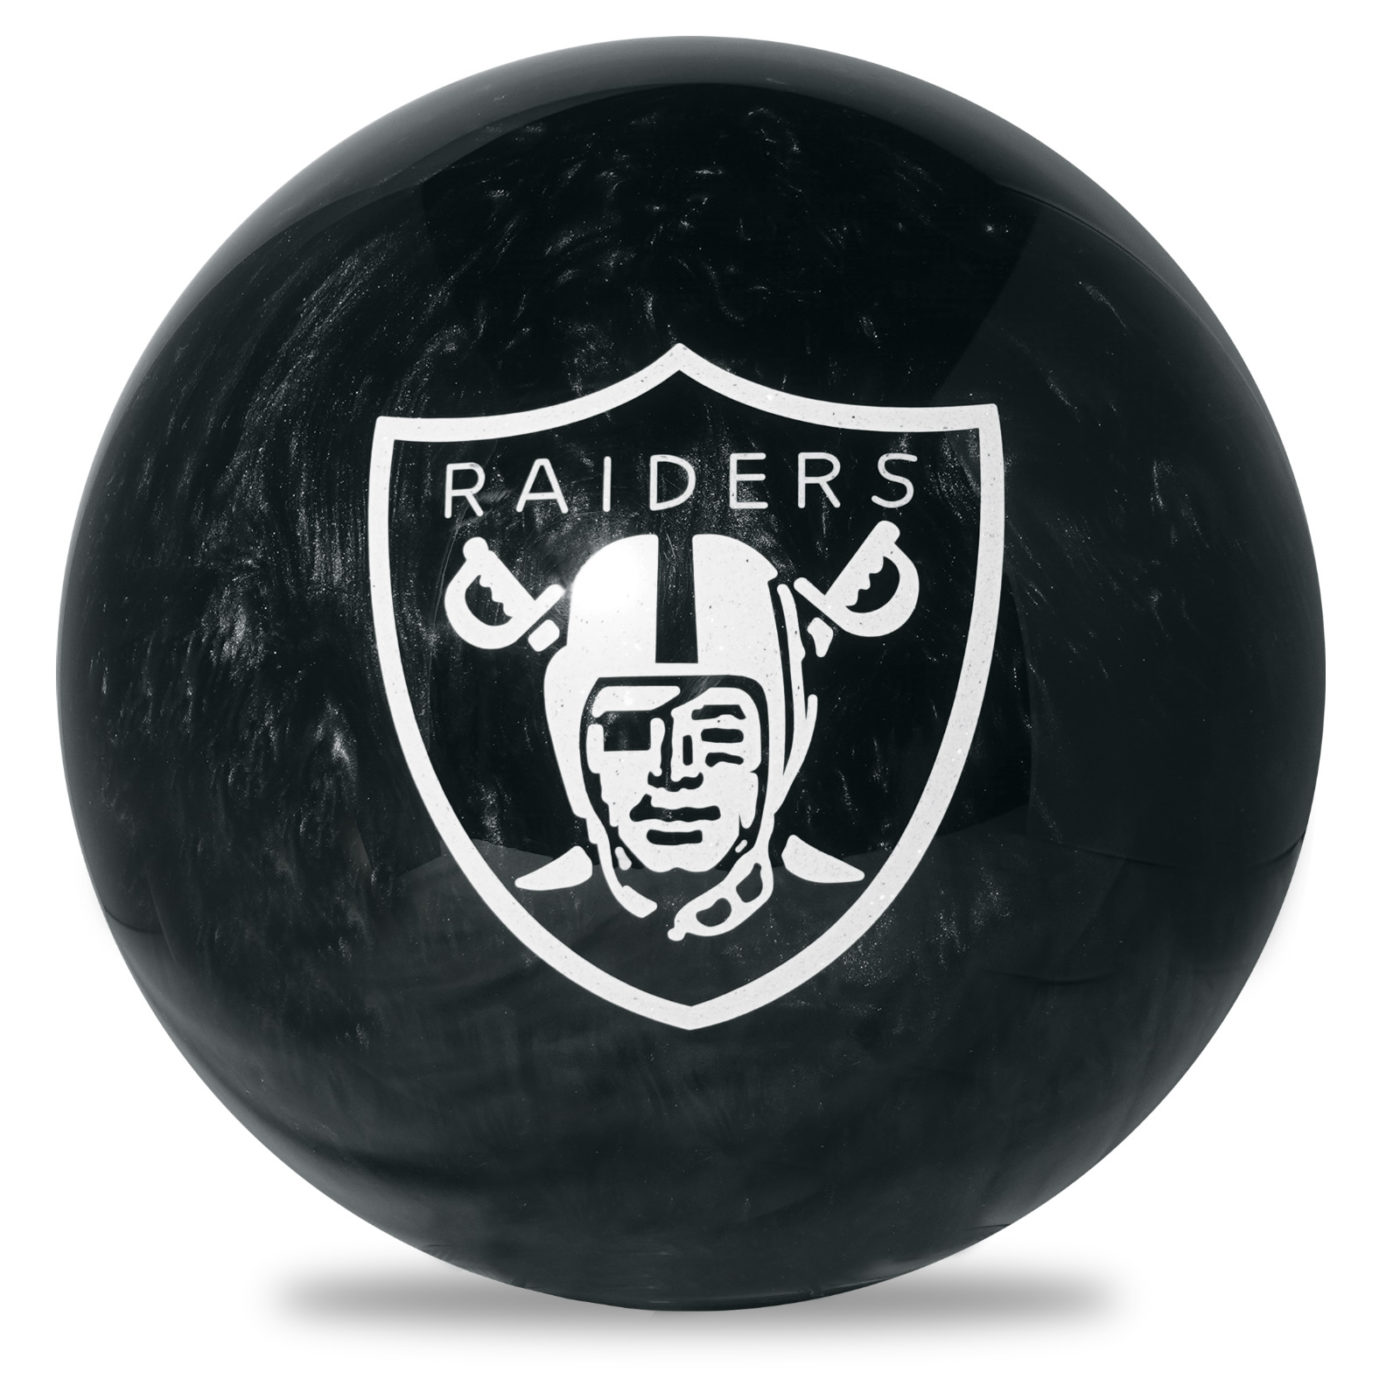 Raiders ball is it plastic or urethane